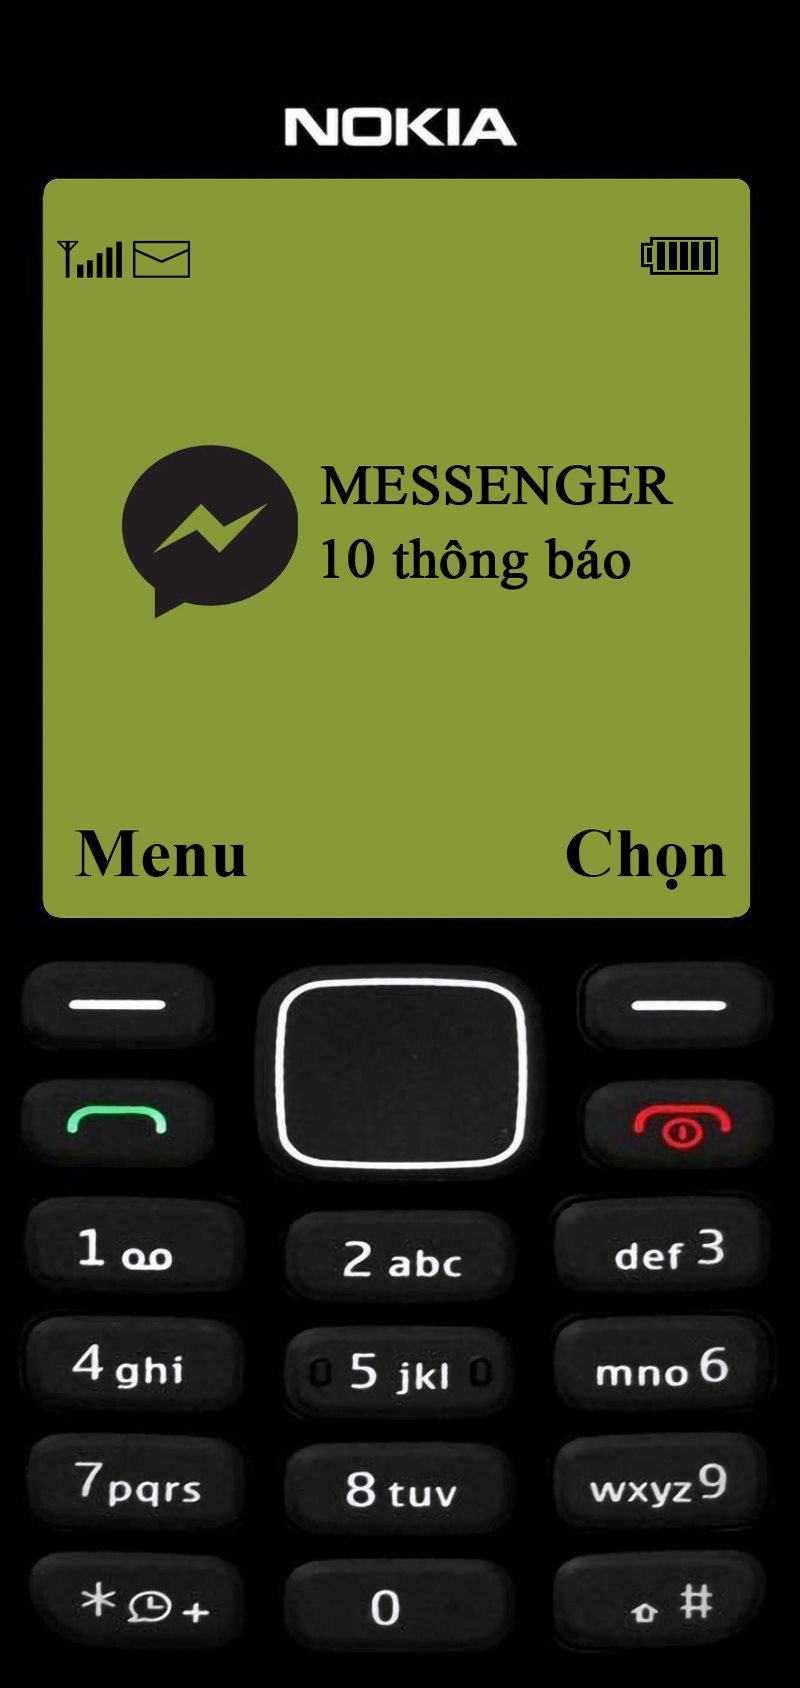 b19-hinh-nen-nokia-1280-cho-samsung-oppo-tren-iphone-anh-nen-nokia-1280-danh-cho-smartphone-dien-thoai-cam-ung.jpg